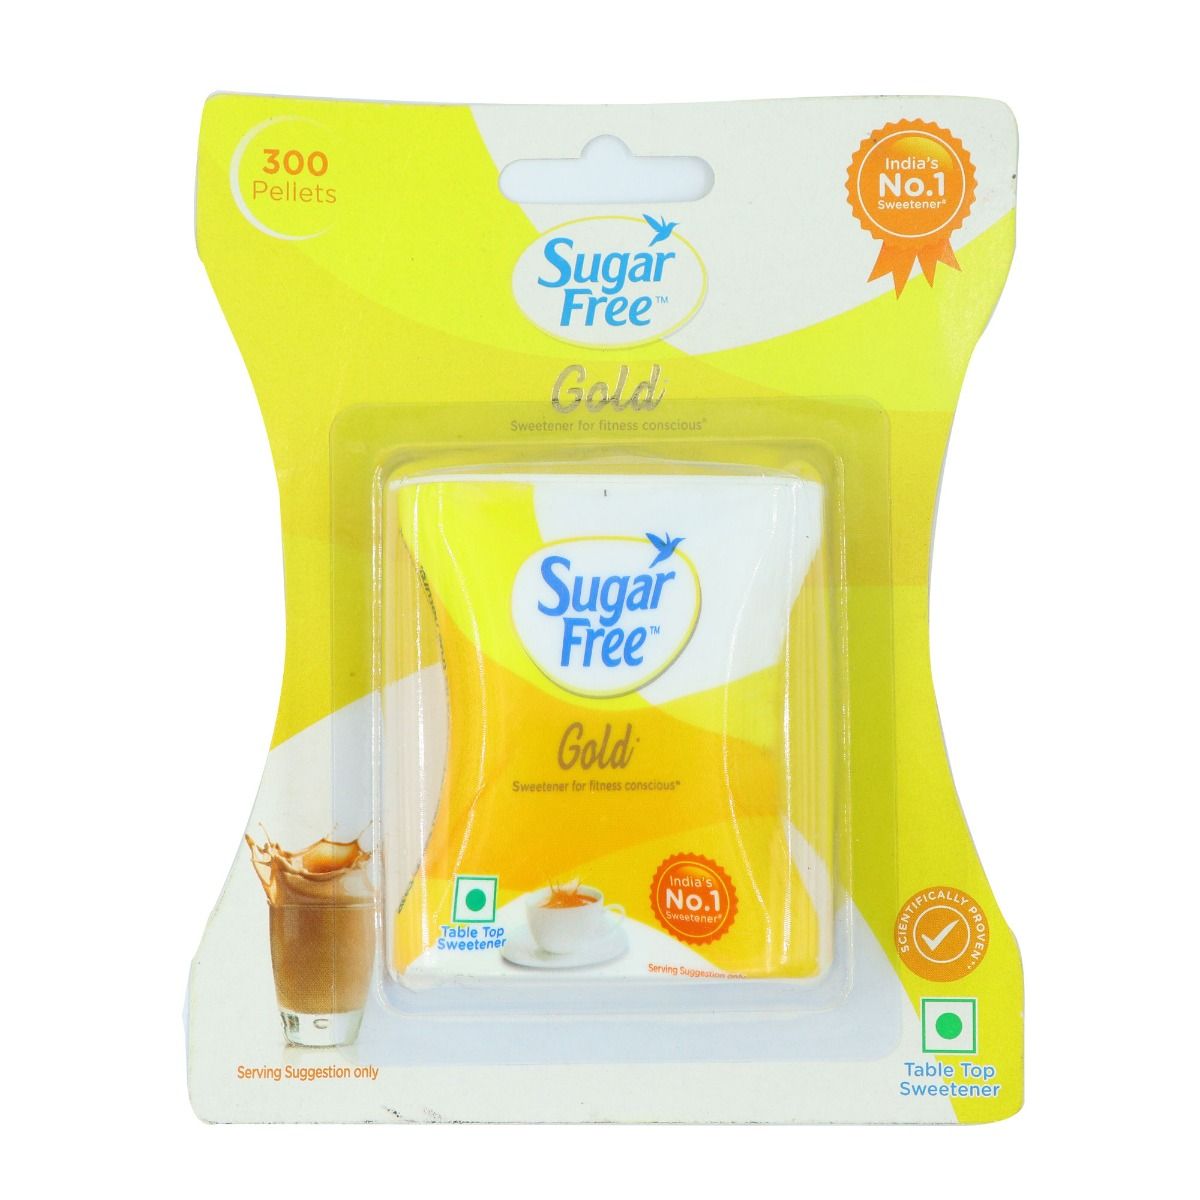 Sugar Free Gold Low Calorie Sweetener, 300 Pellets, Pack of 1 